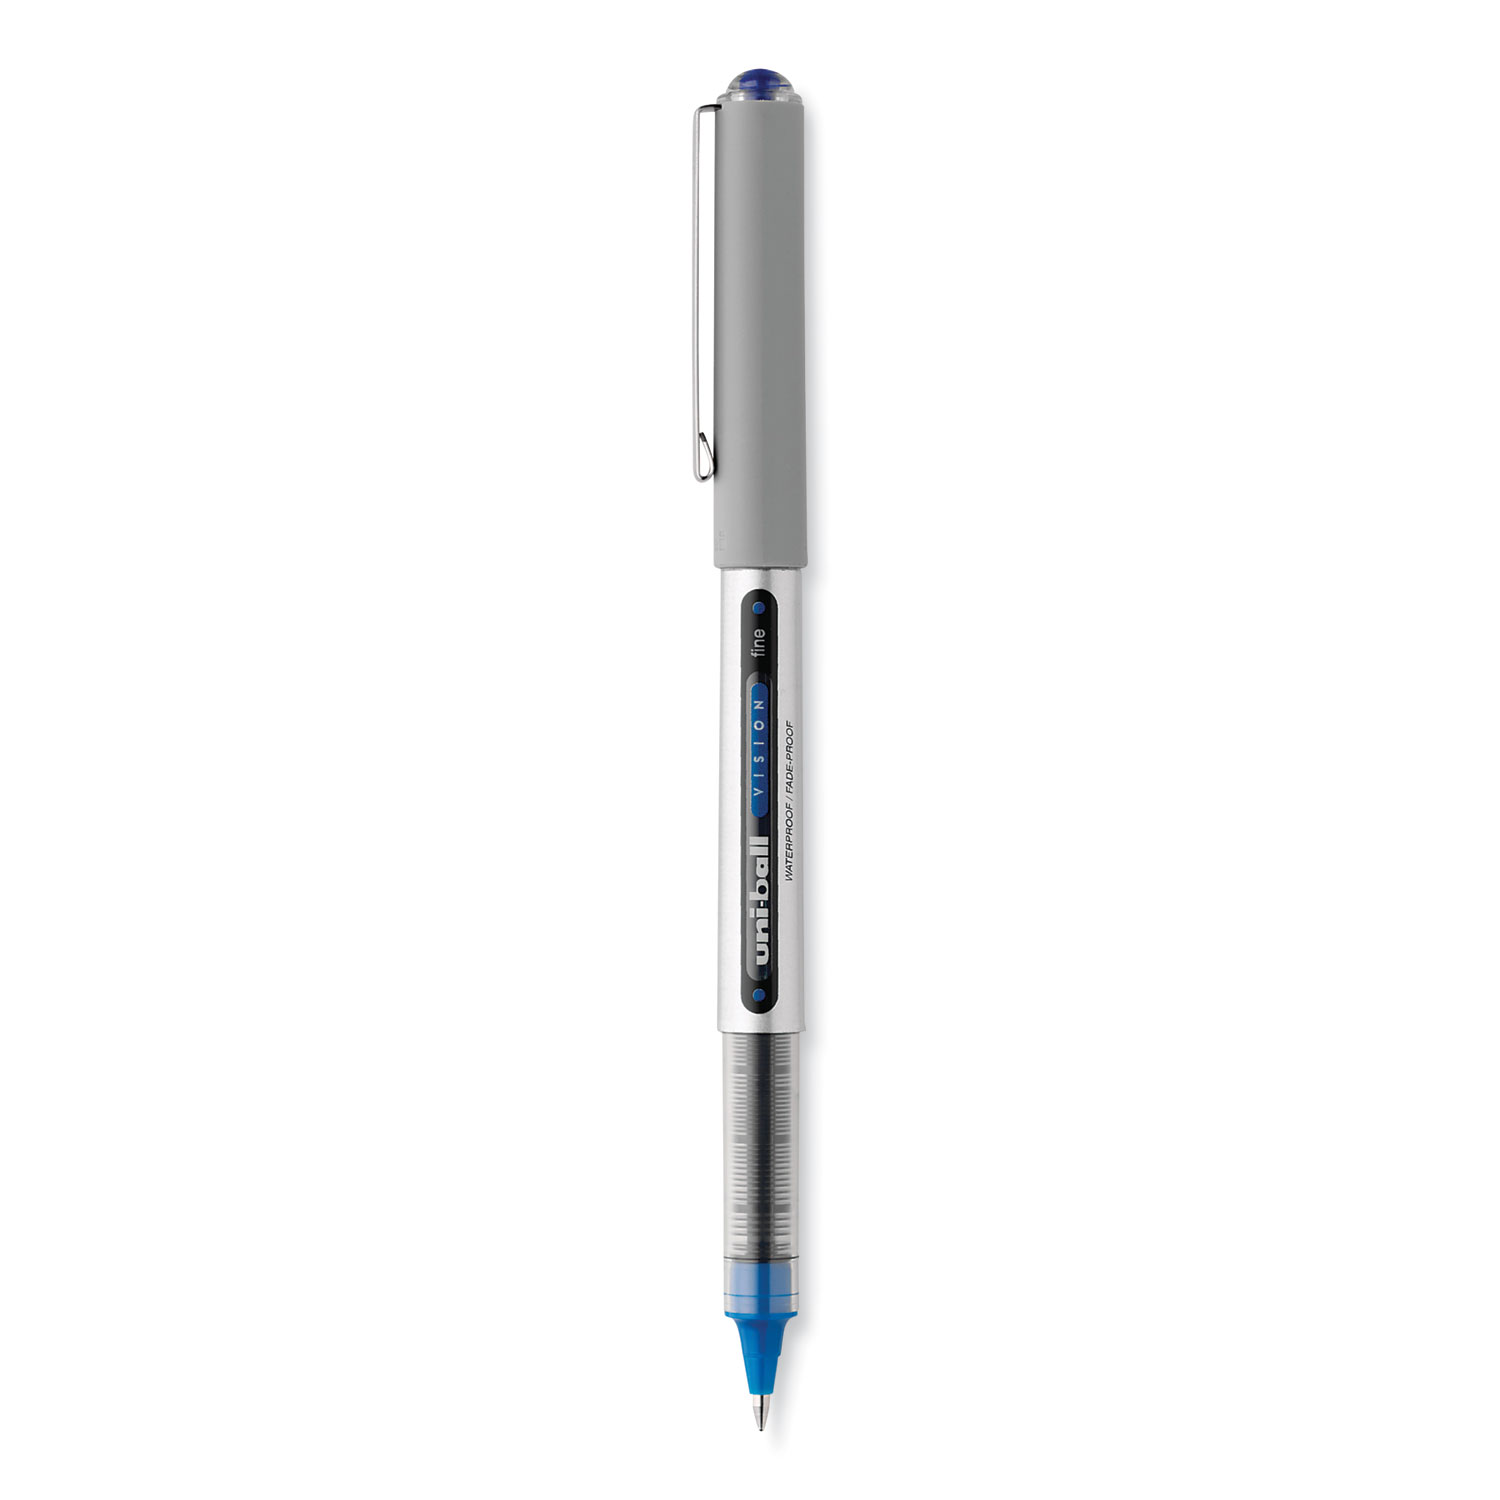 emott Porous Point Pens, Fine 0.4 mm, Assorted Ink, 10/Pack, Uni-Ball (Ubc24836)